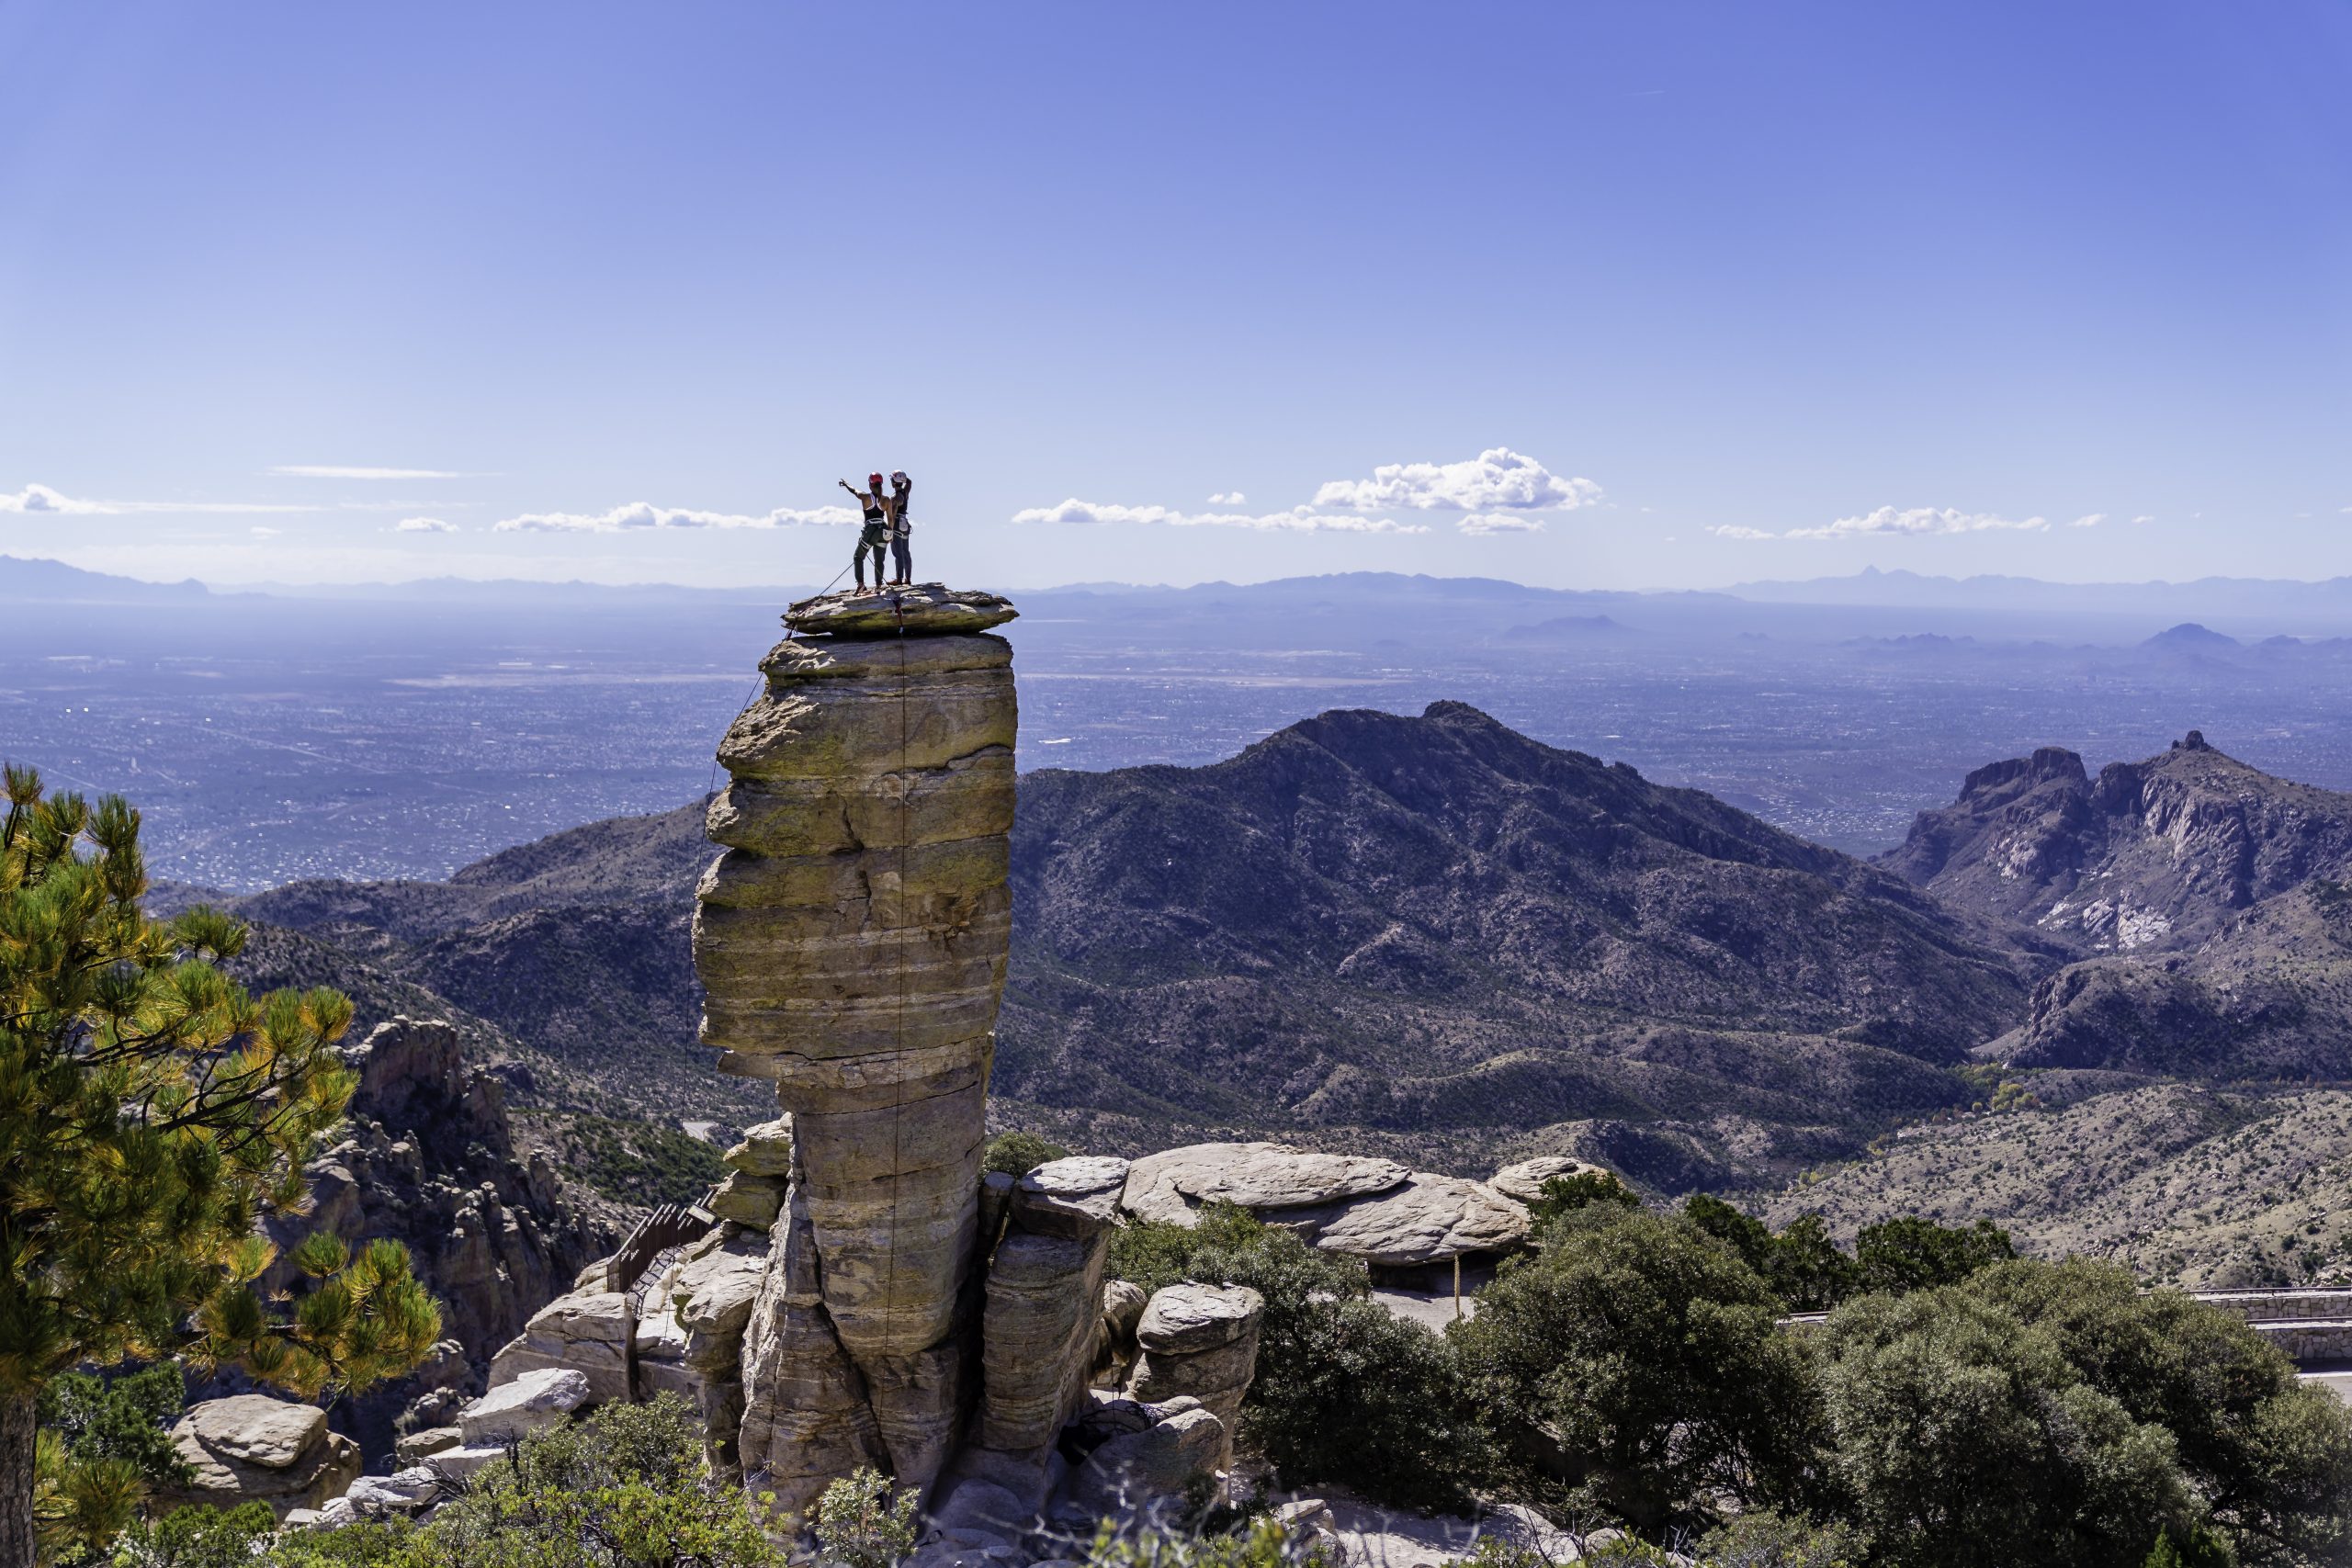 Mt Lemmon rock climbing 2 credit Visit Tucson